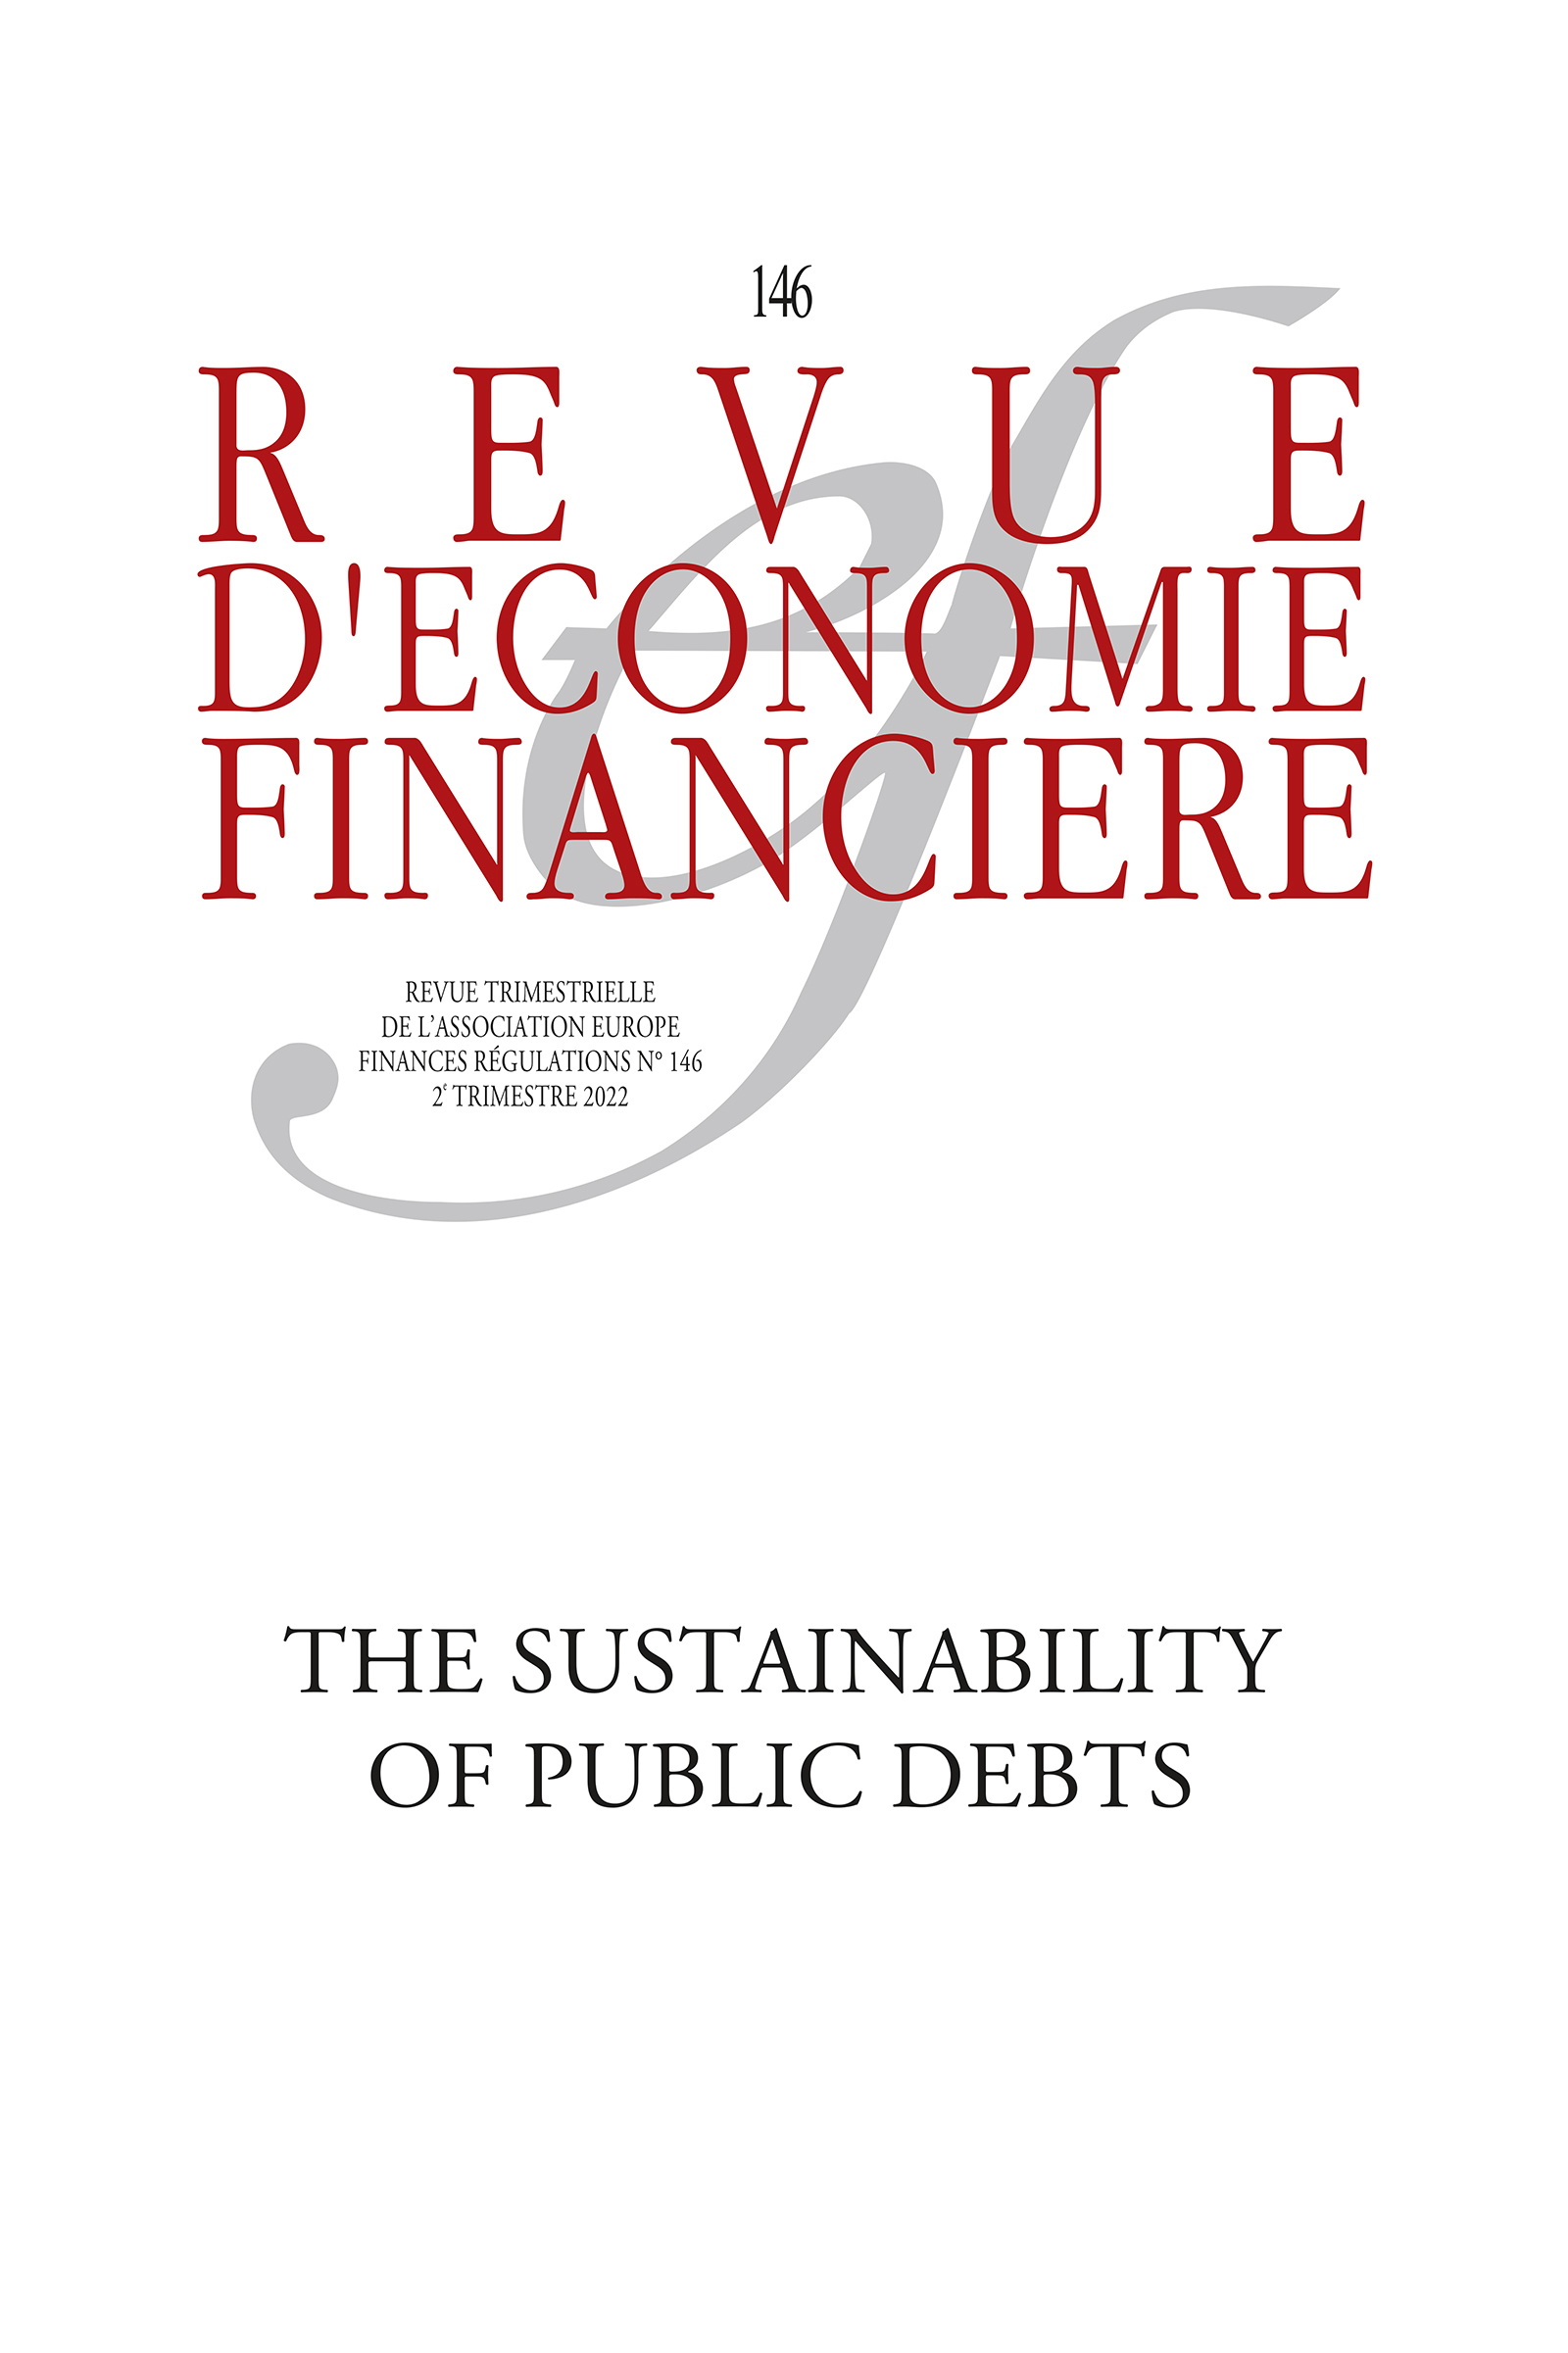 The Sustainability of Public Debts